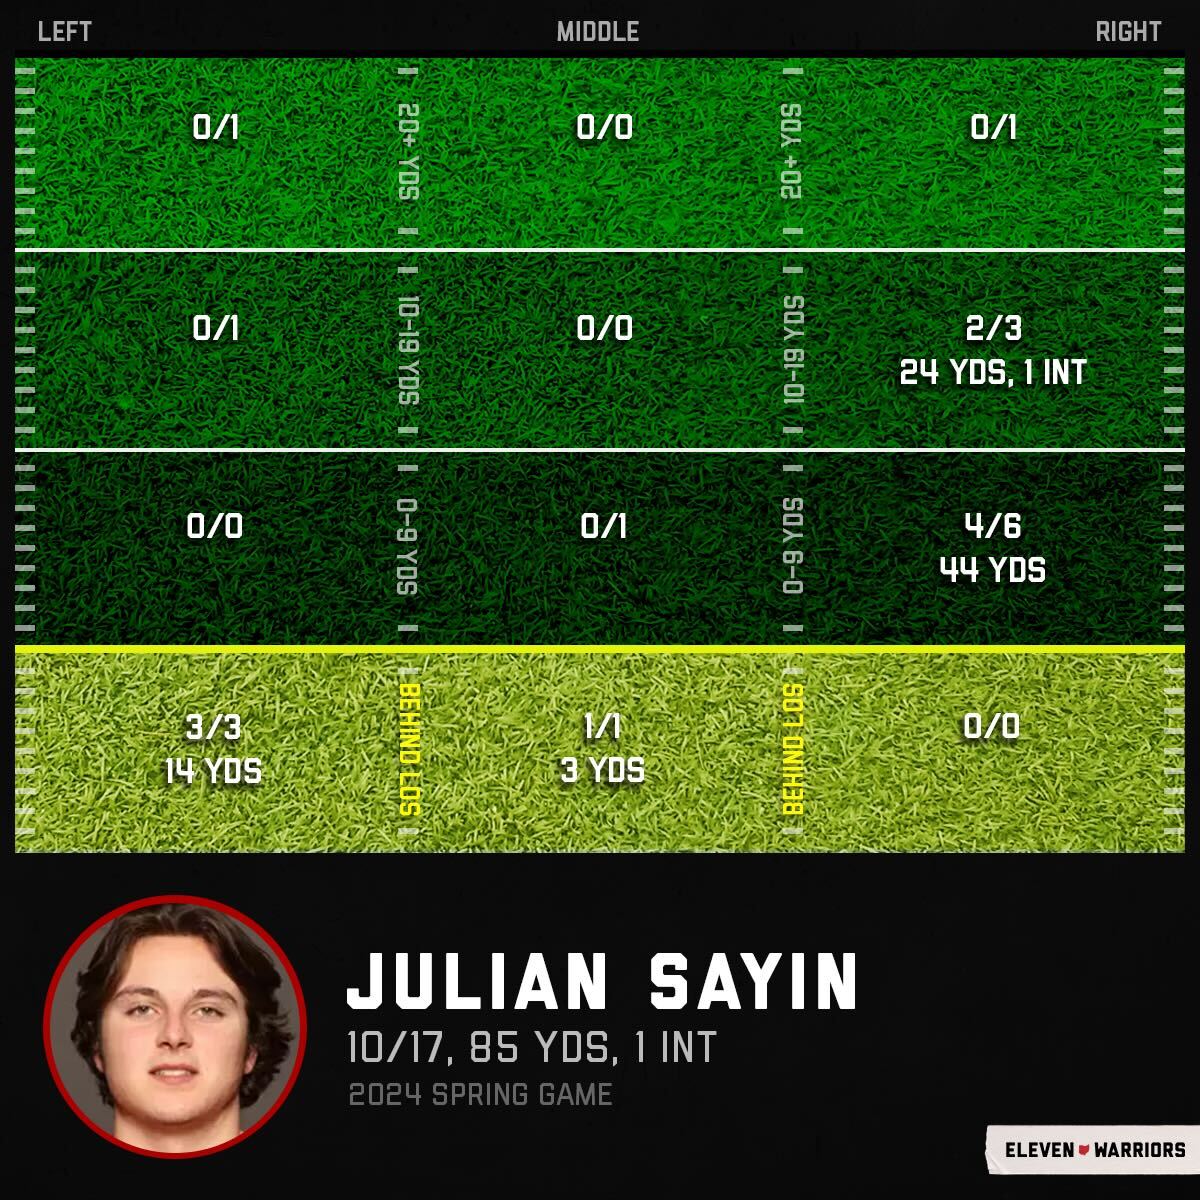 Julian Sayin's passing chart in the 2024 spring game